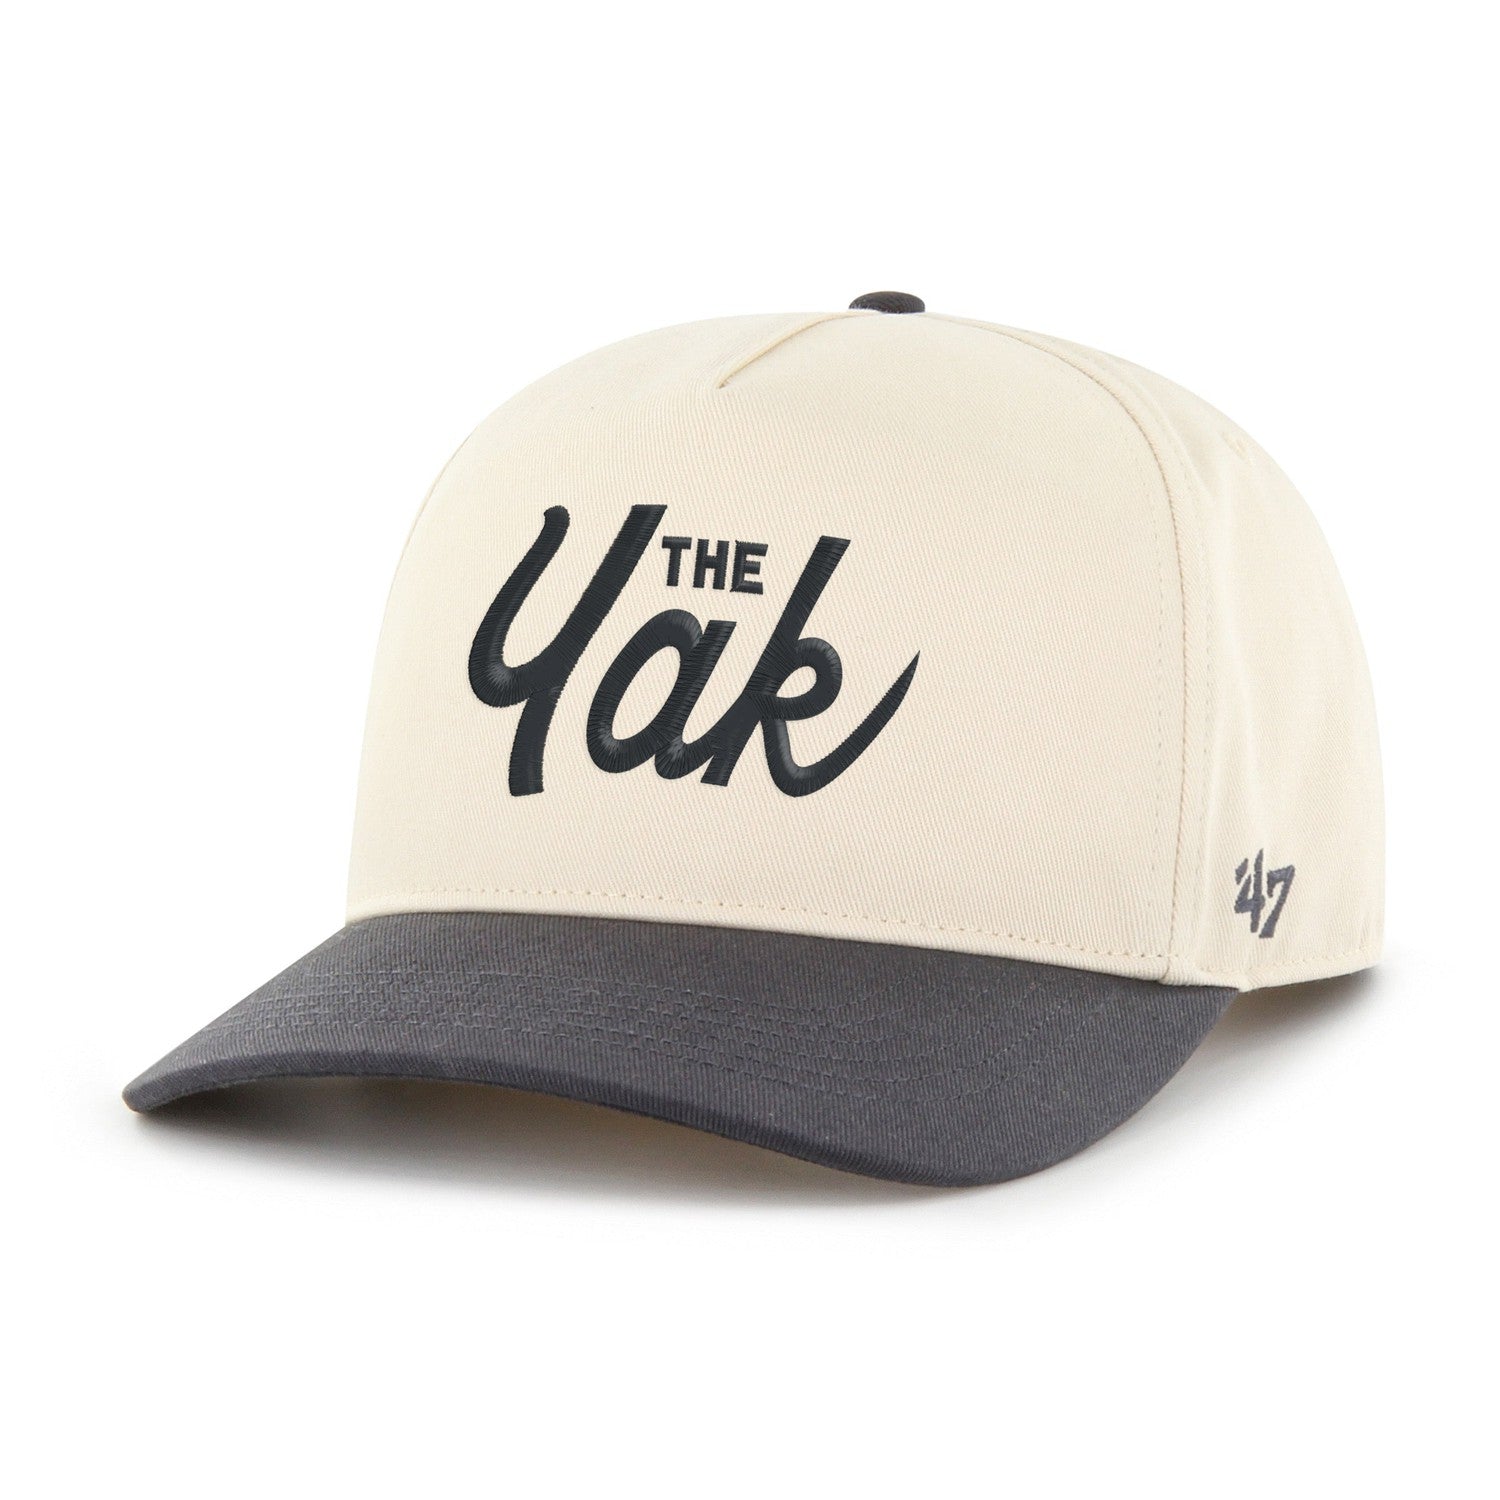 The YAK x '47 HITCH Snapback Hat